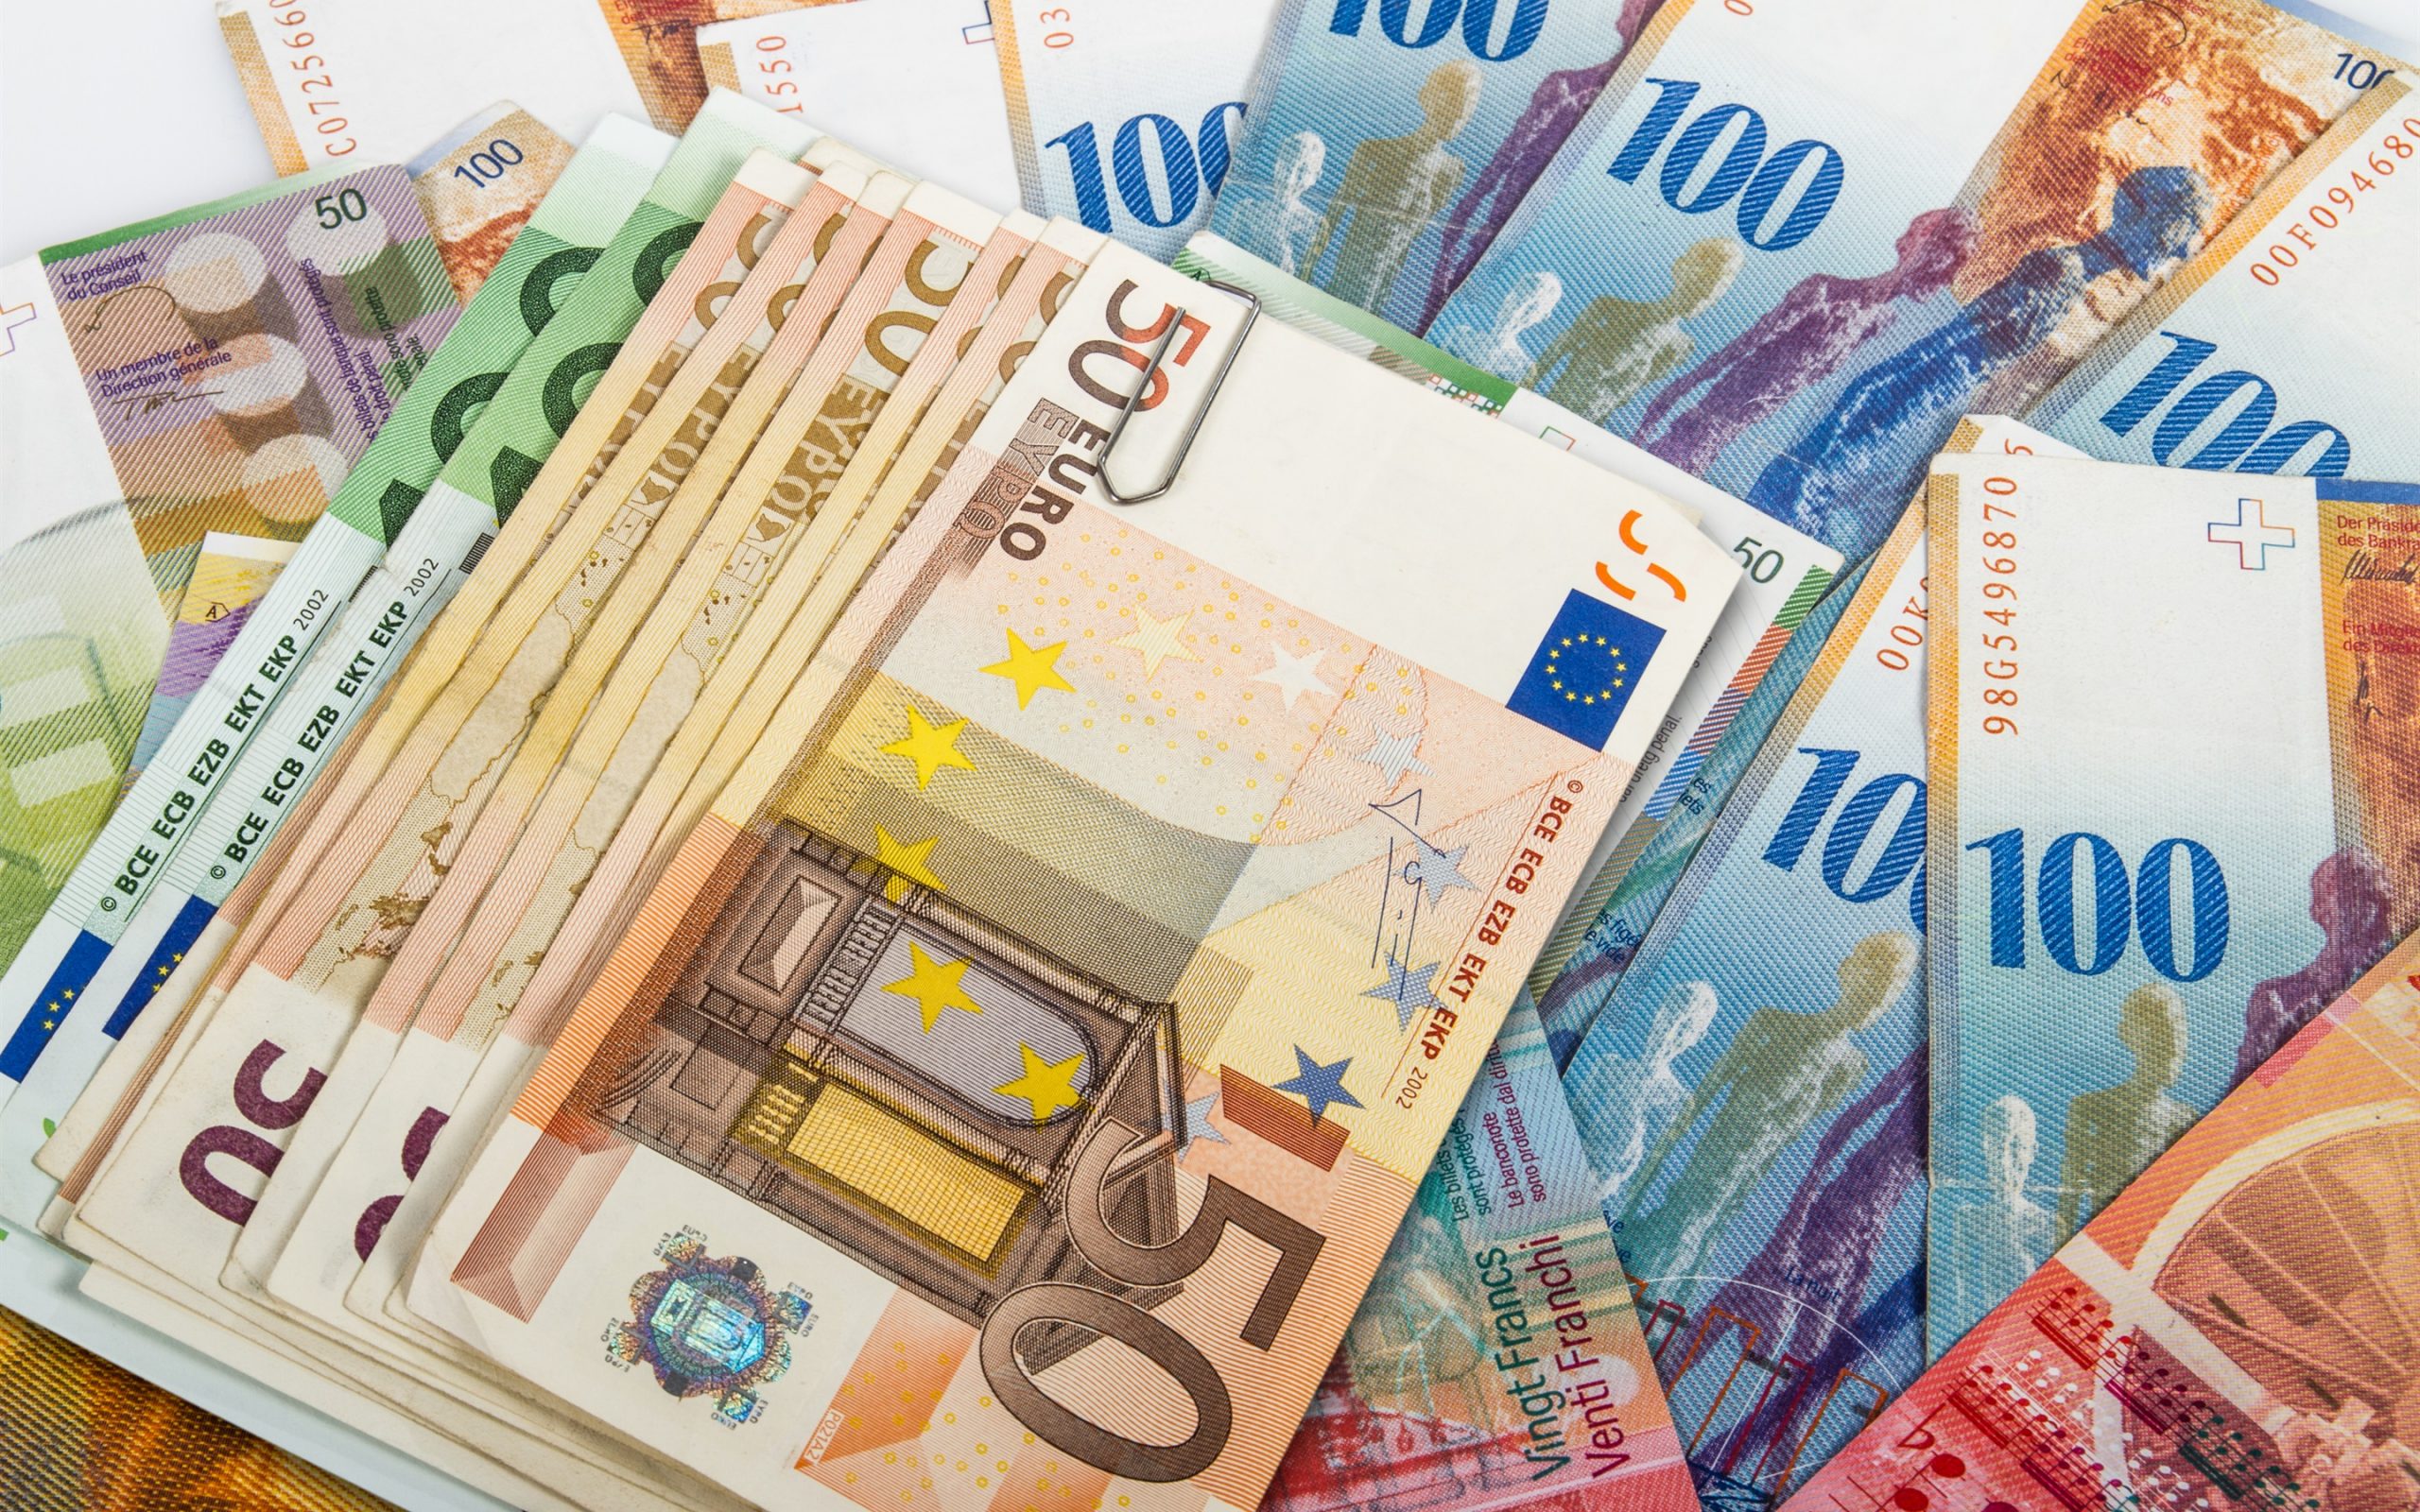 Curs valutar BNR 31 iulie 2020. Ce valoare a atins azi euro